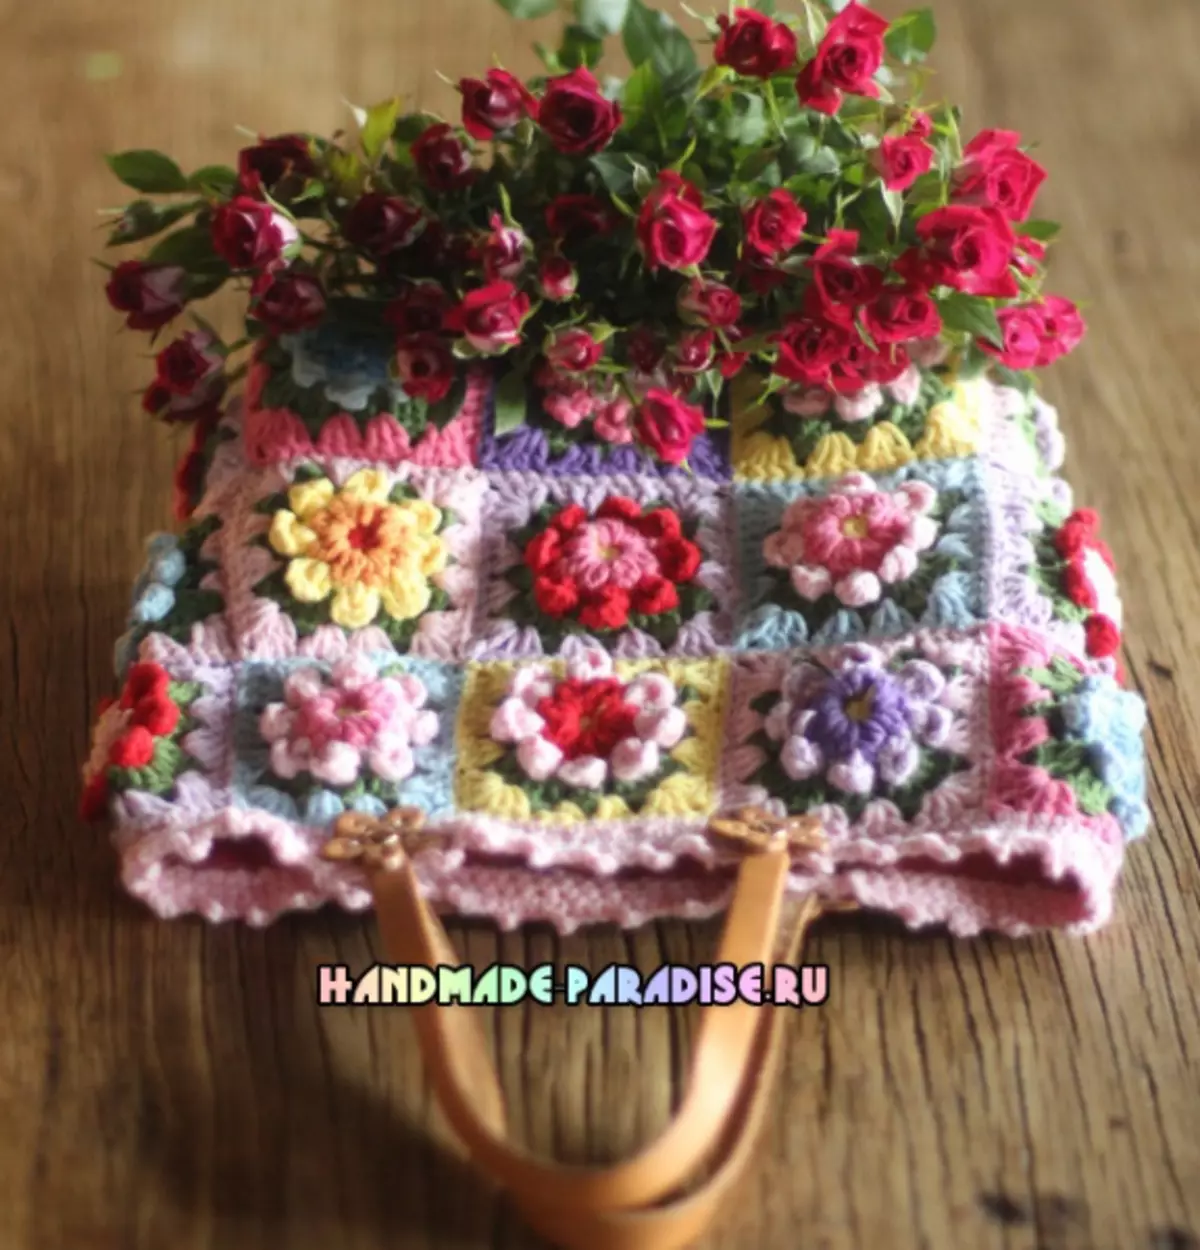 Buotif Crochet bag